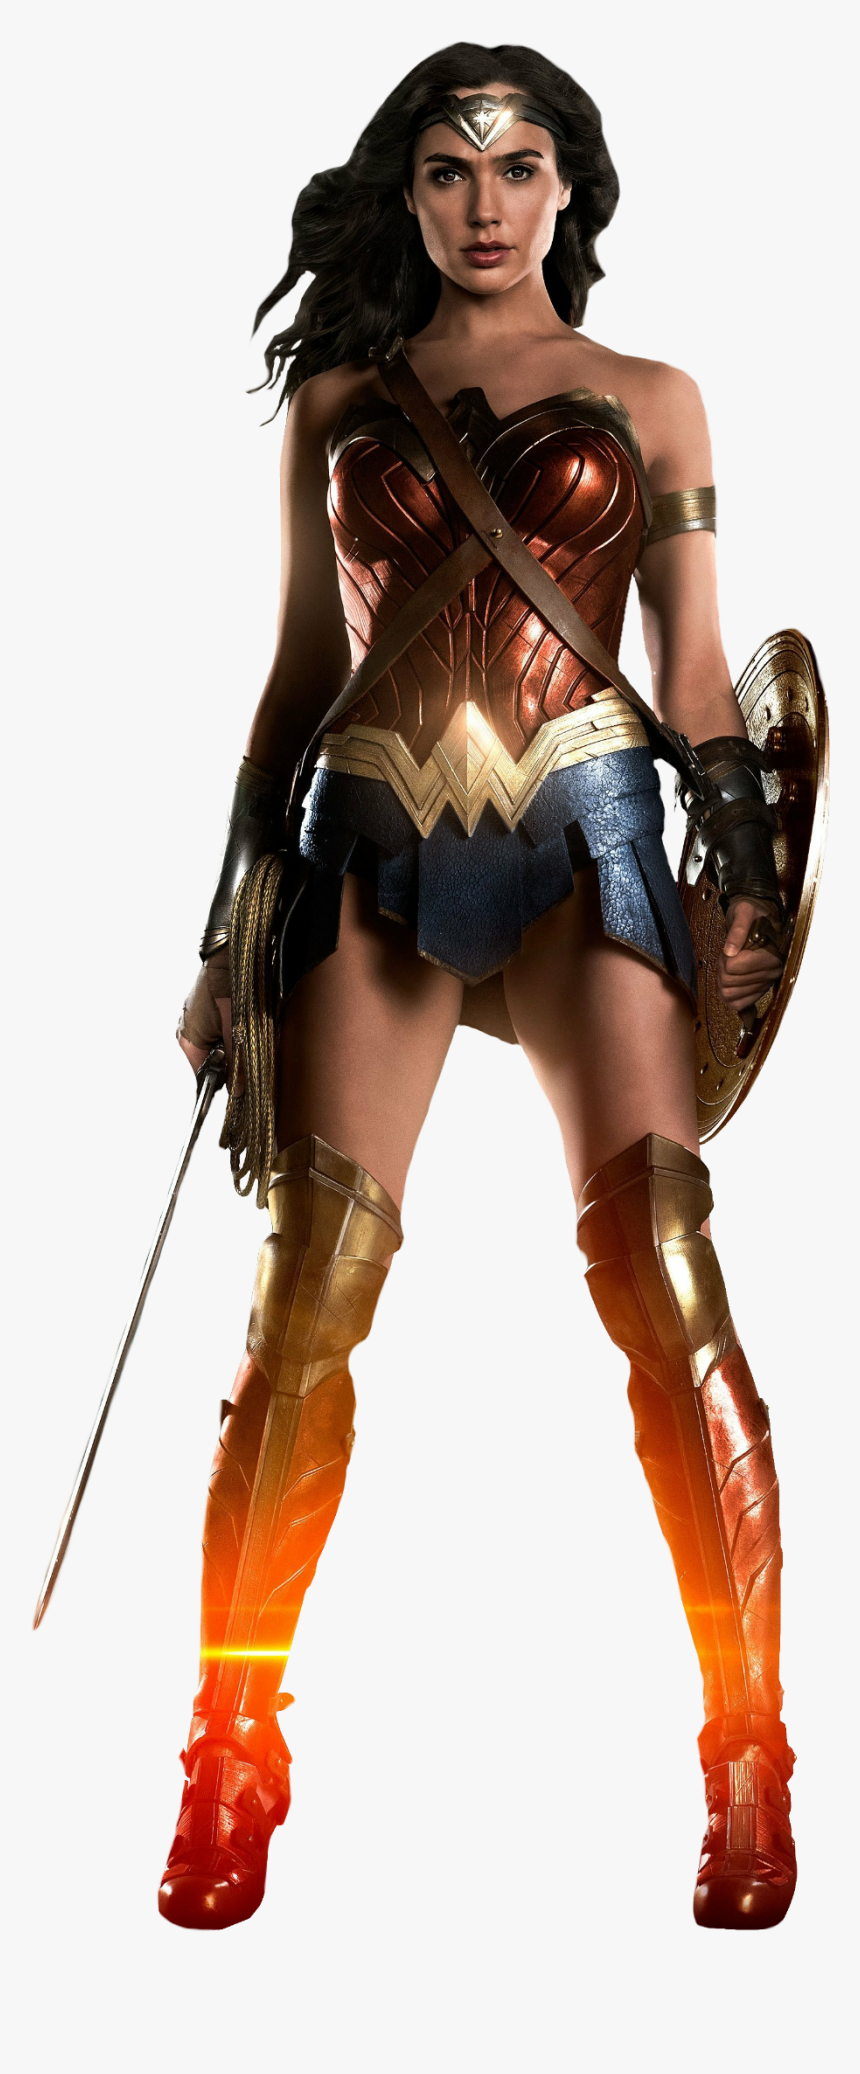 Wonder Woman Png - Wonder Woman Transparent, Png Download, Free Download